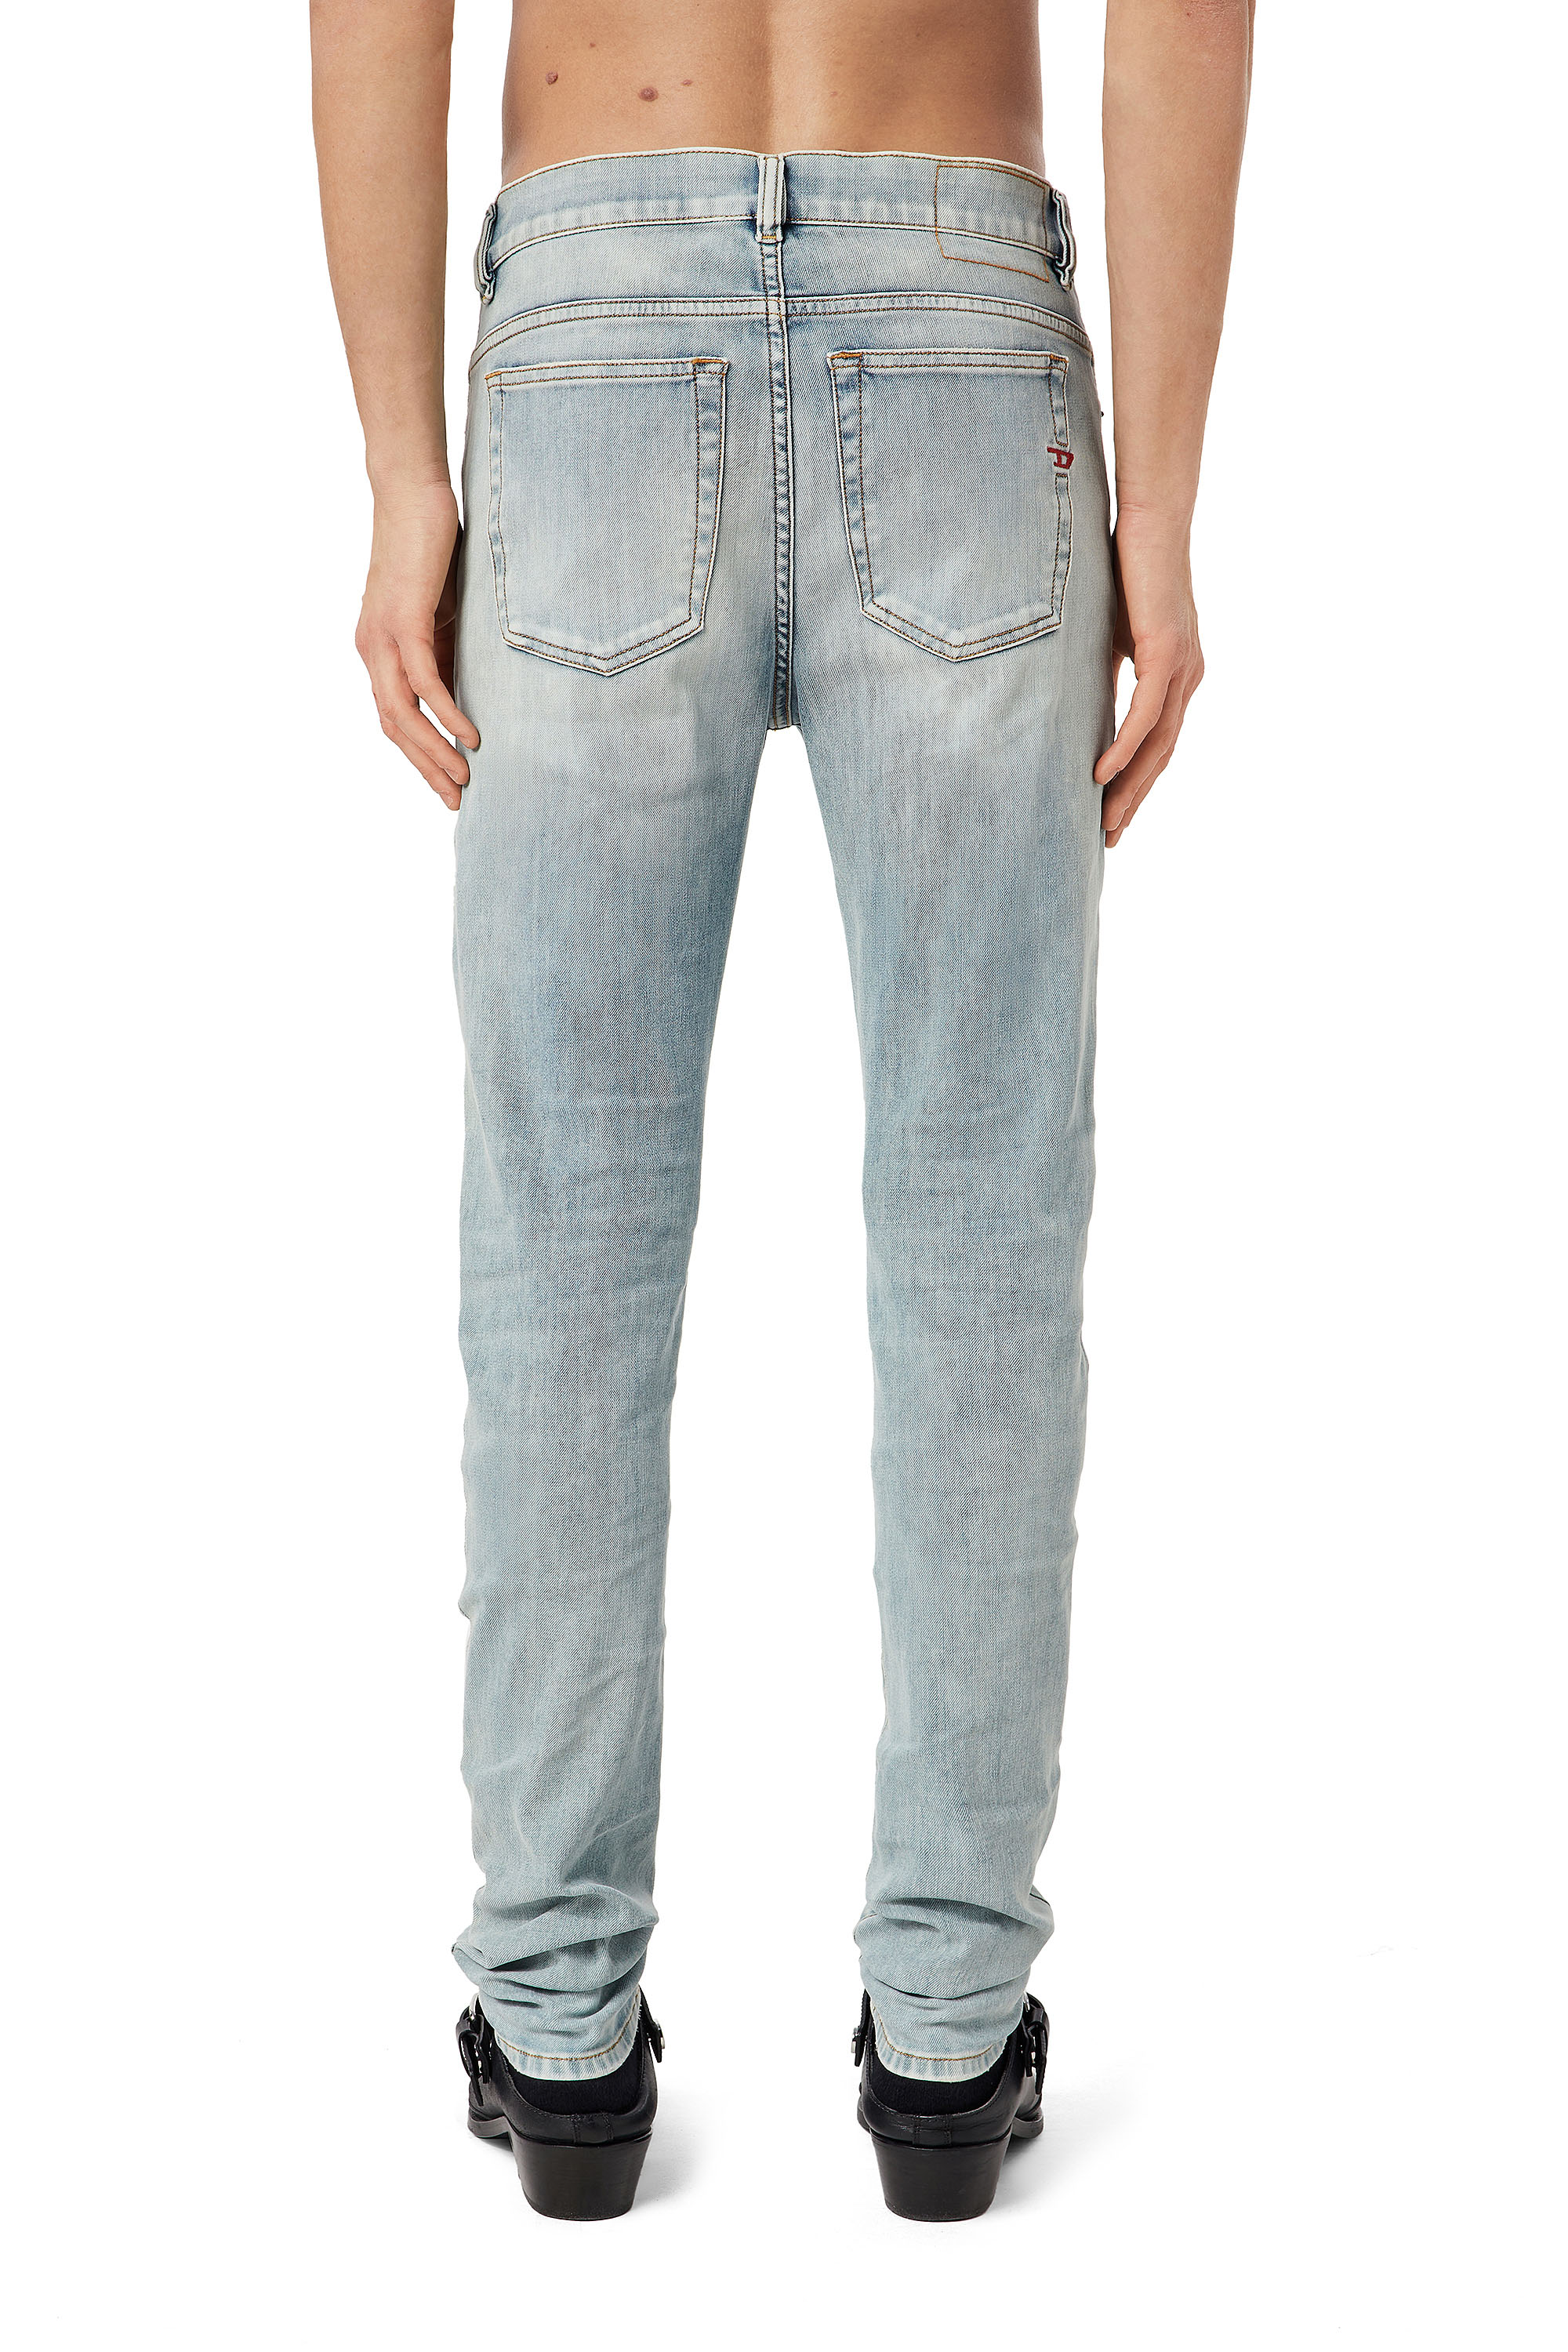 Men's Skinny Jeans: D-Amny, D-Istort, Sleenker | Diesel®